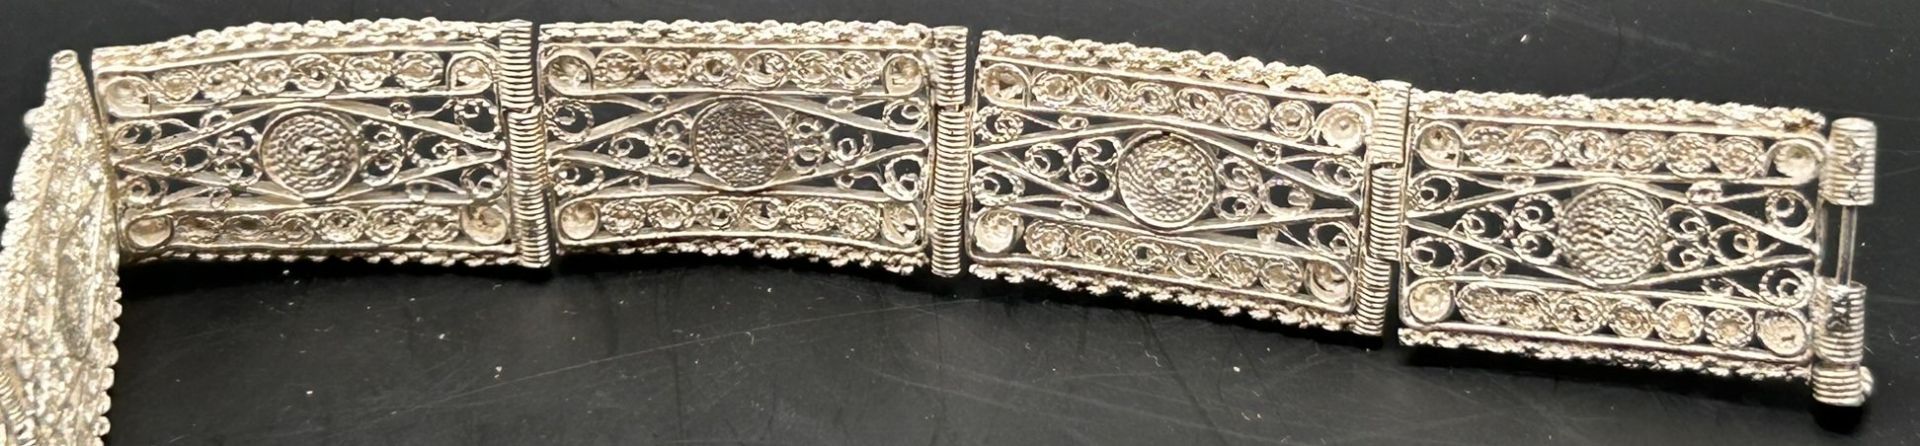 filigranes Silber-Armband-925-, Handarbeit, L-18,5 cm, 31,4 gr. - Image 4 of 4